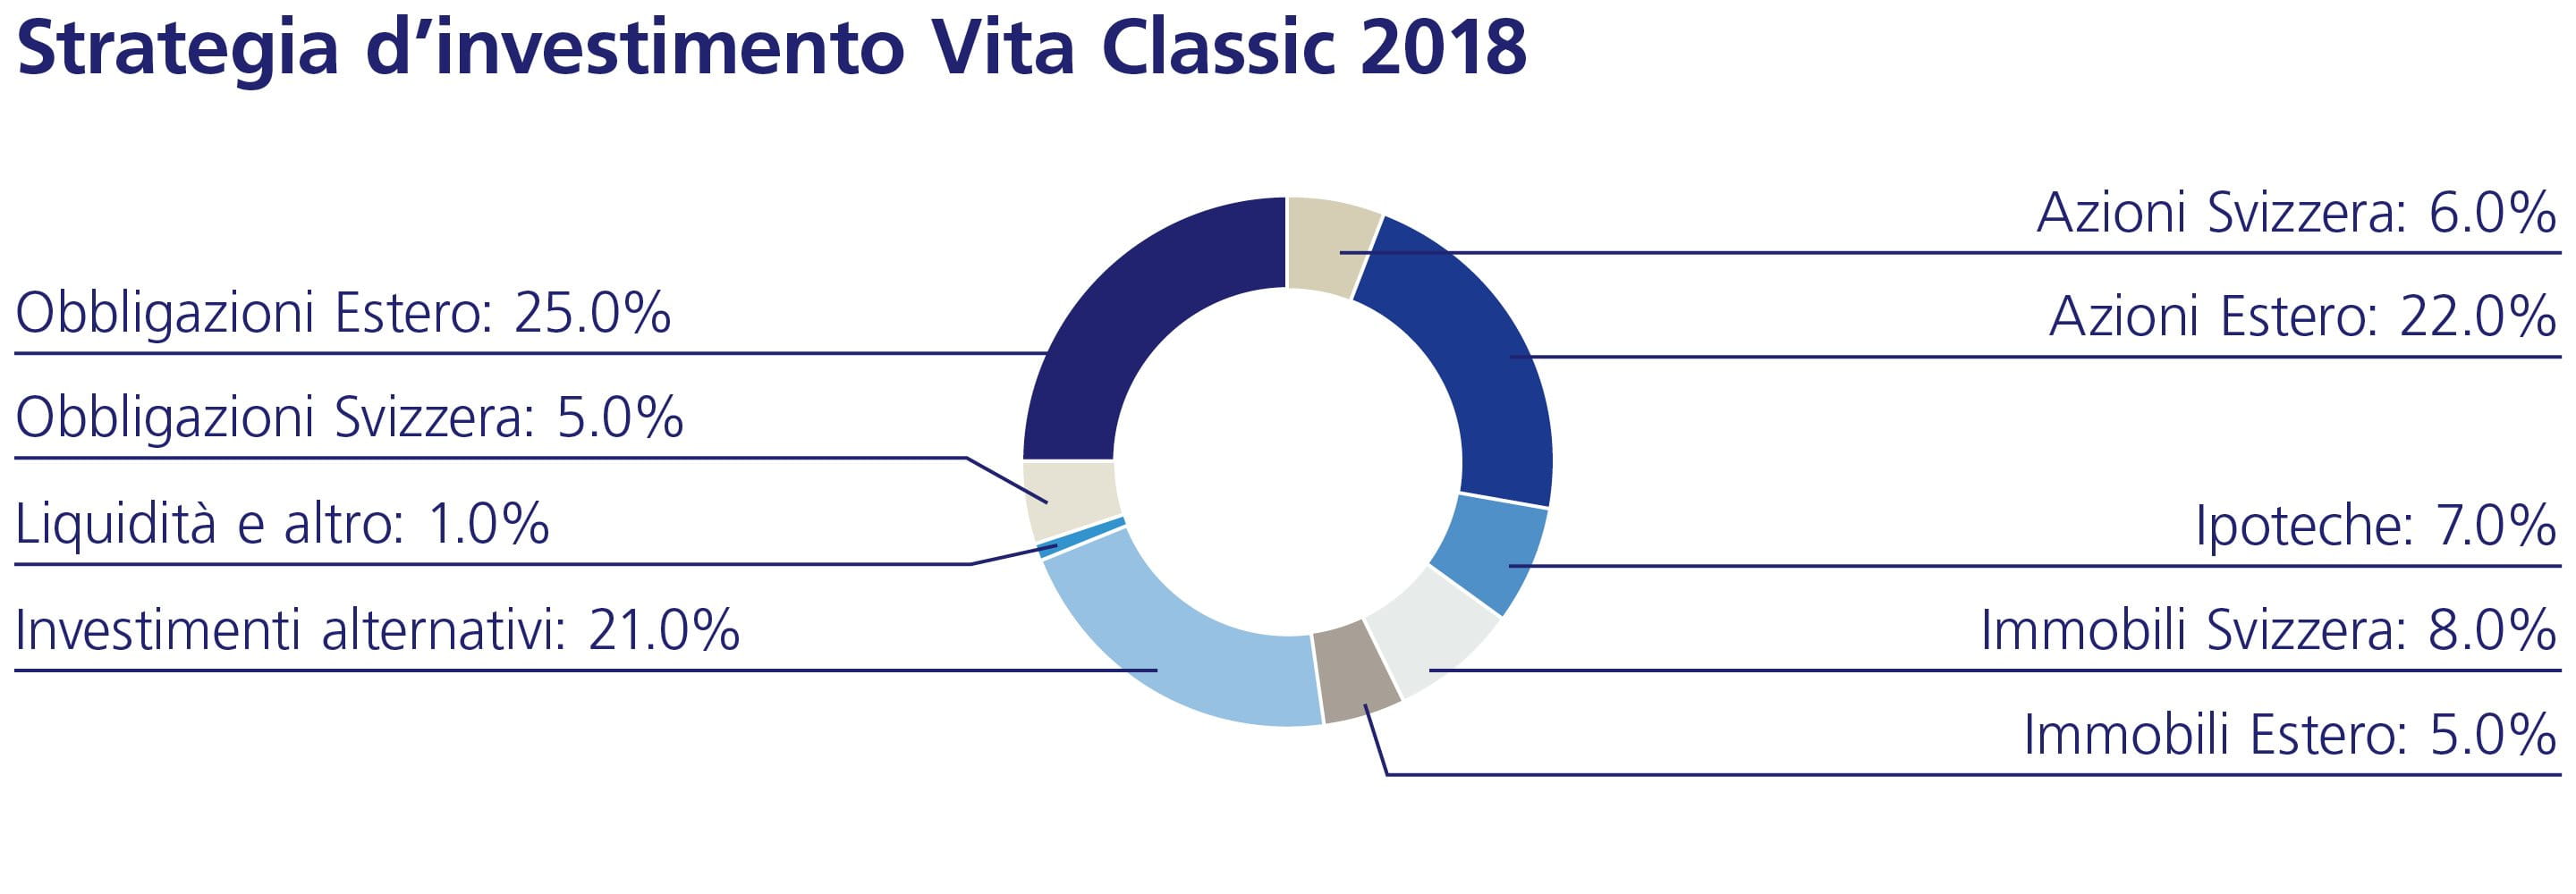 Strategia d'investimento Vita Classic 2018